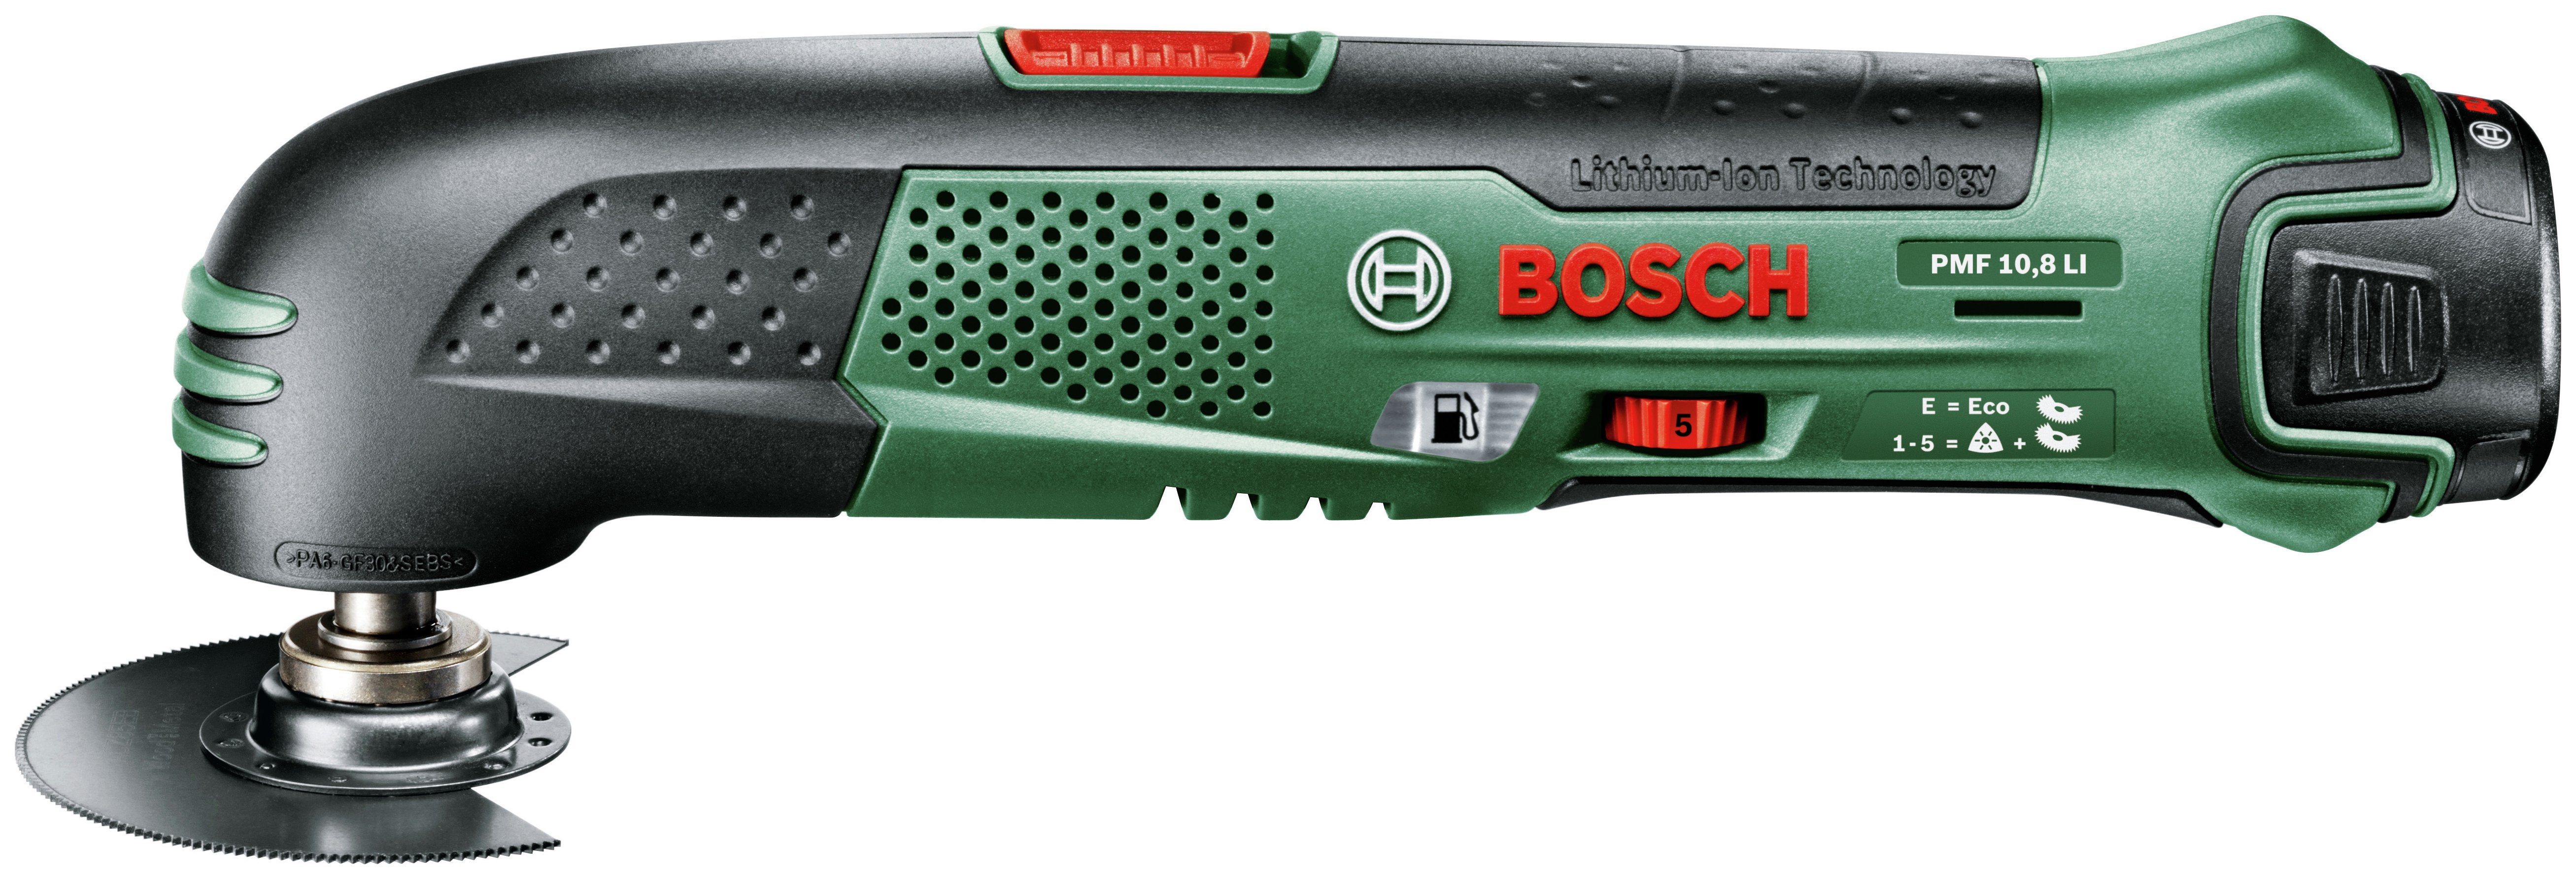 Bosch PMF Cordless Multi Tool - 10.8V